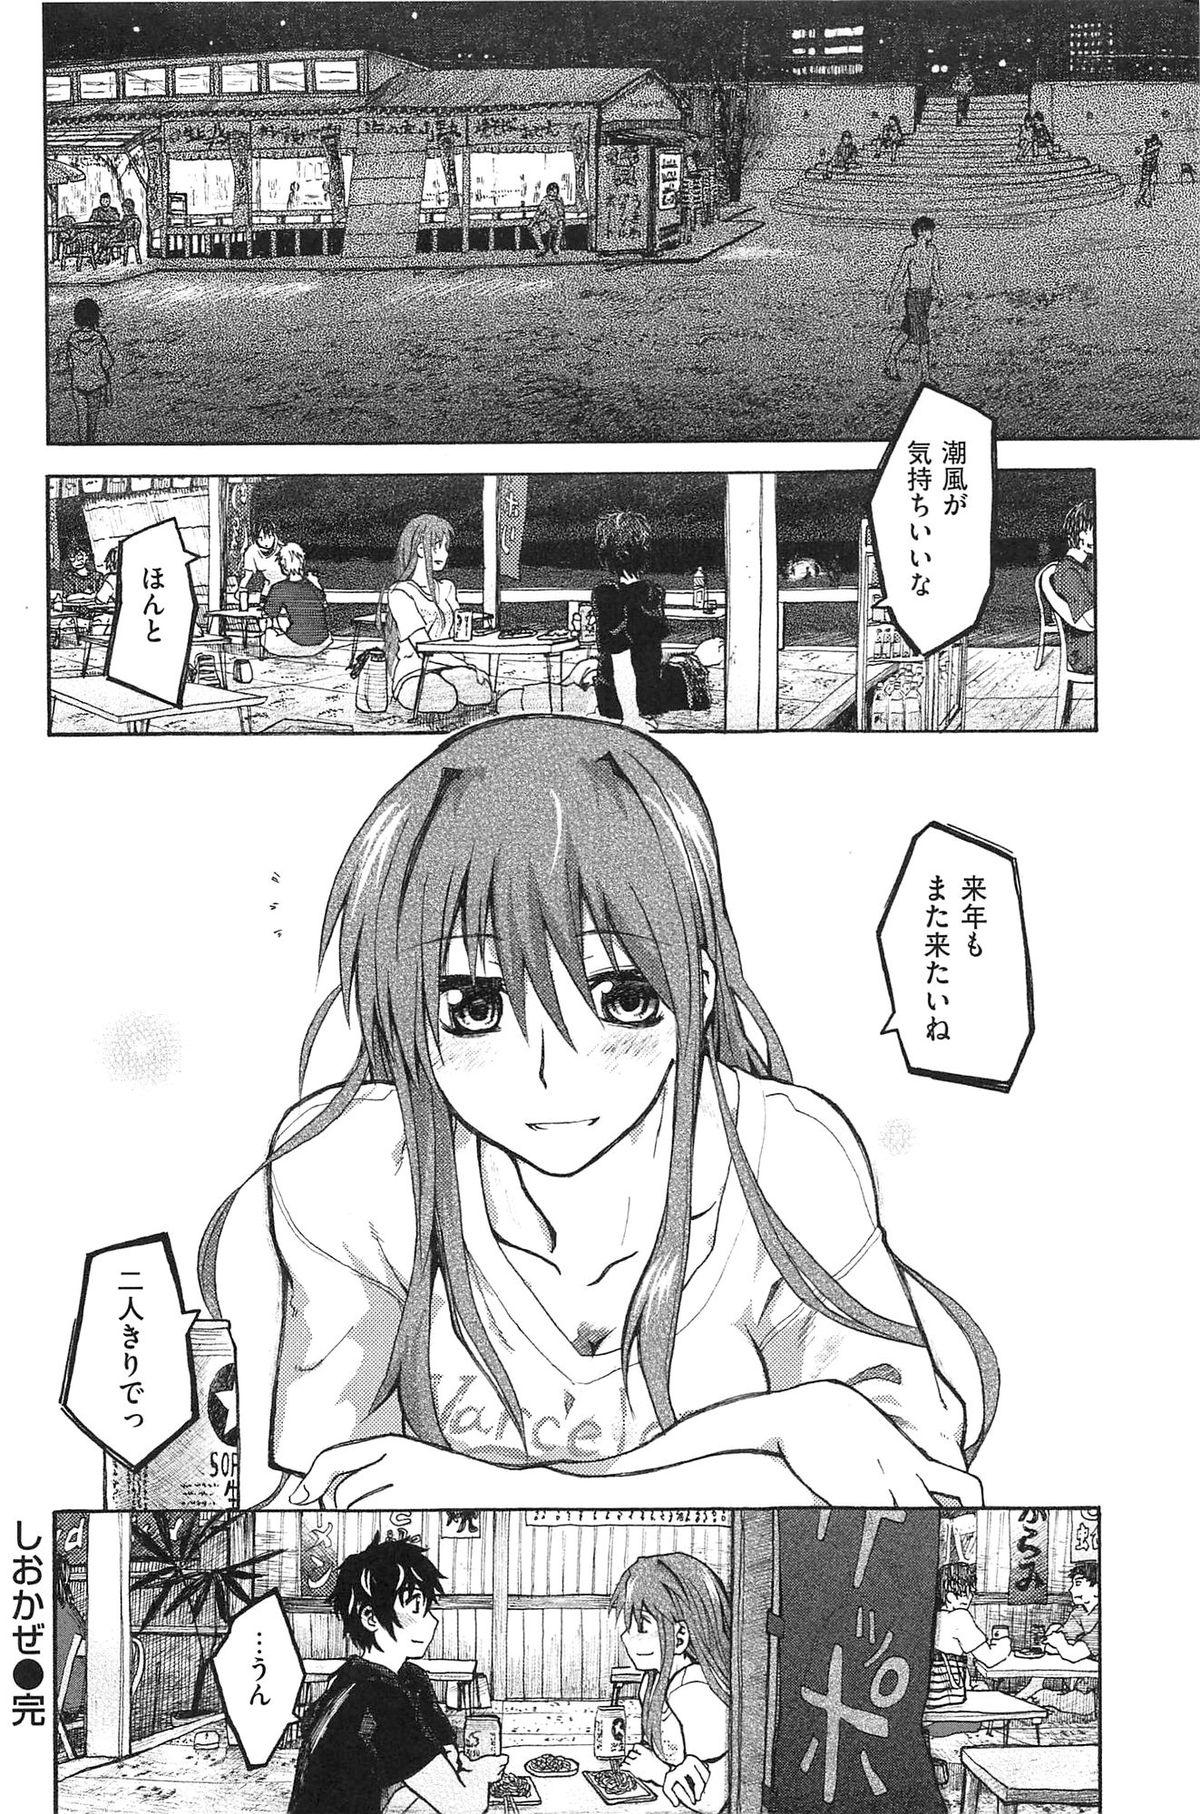 [Dagashi] Junketsu no Owaru Hibi (Beautiful Days of Losing Virginity) … (WANI MAGAZINE COMICS SPECIAL) 164